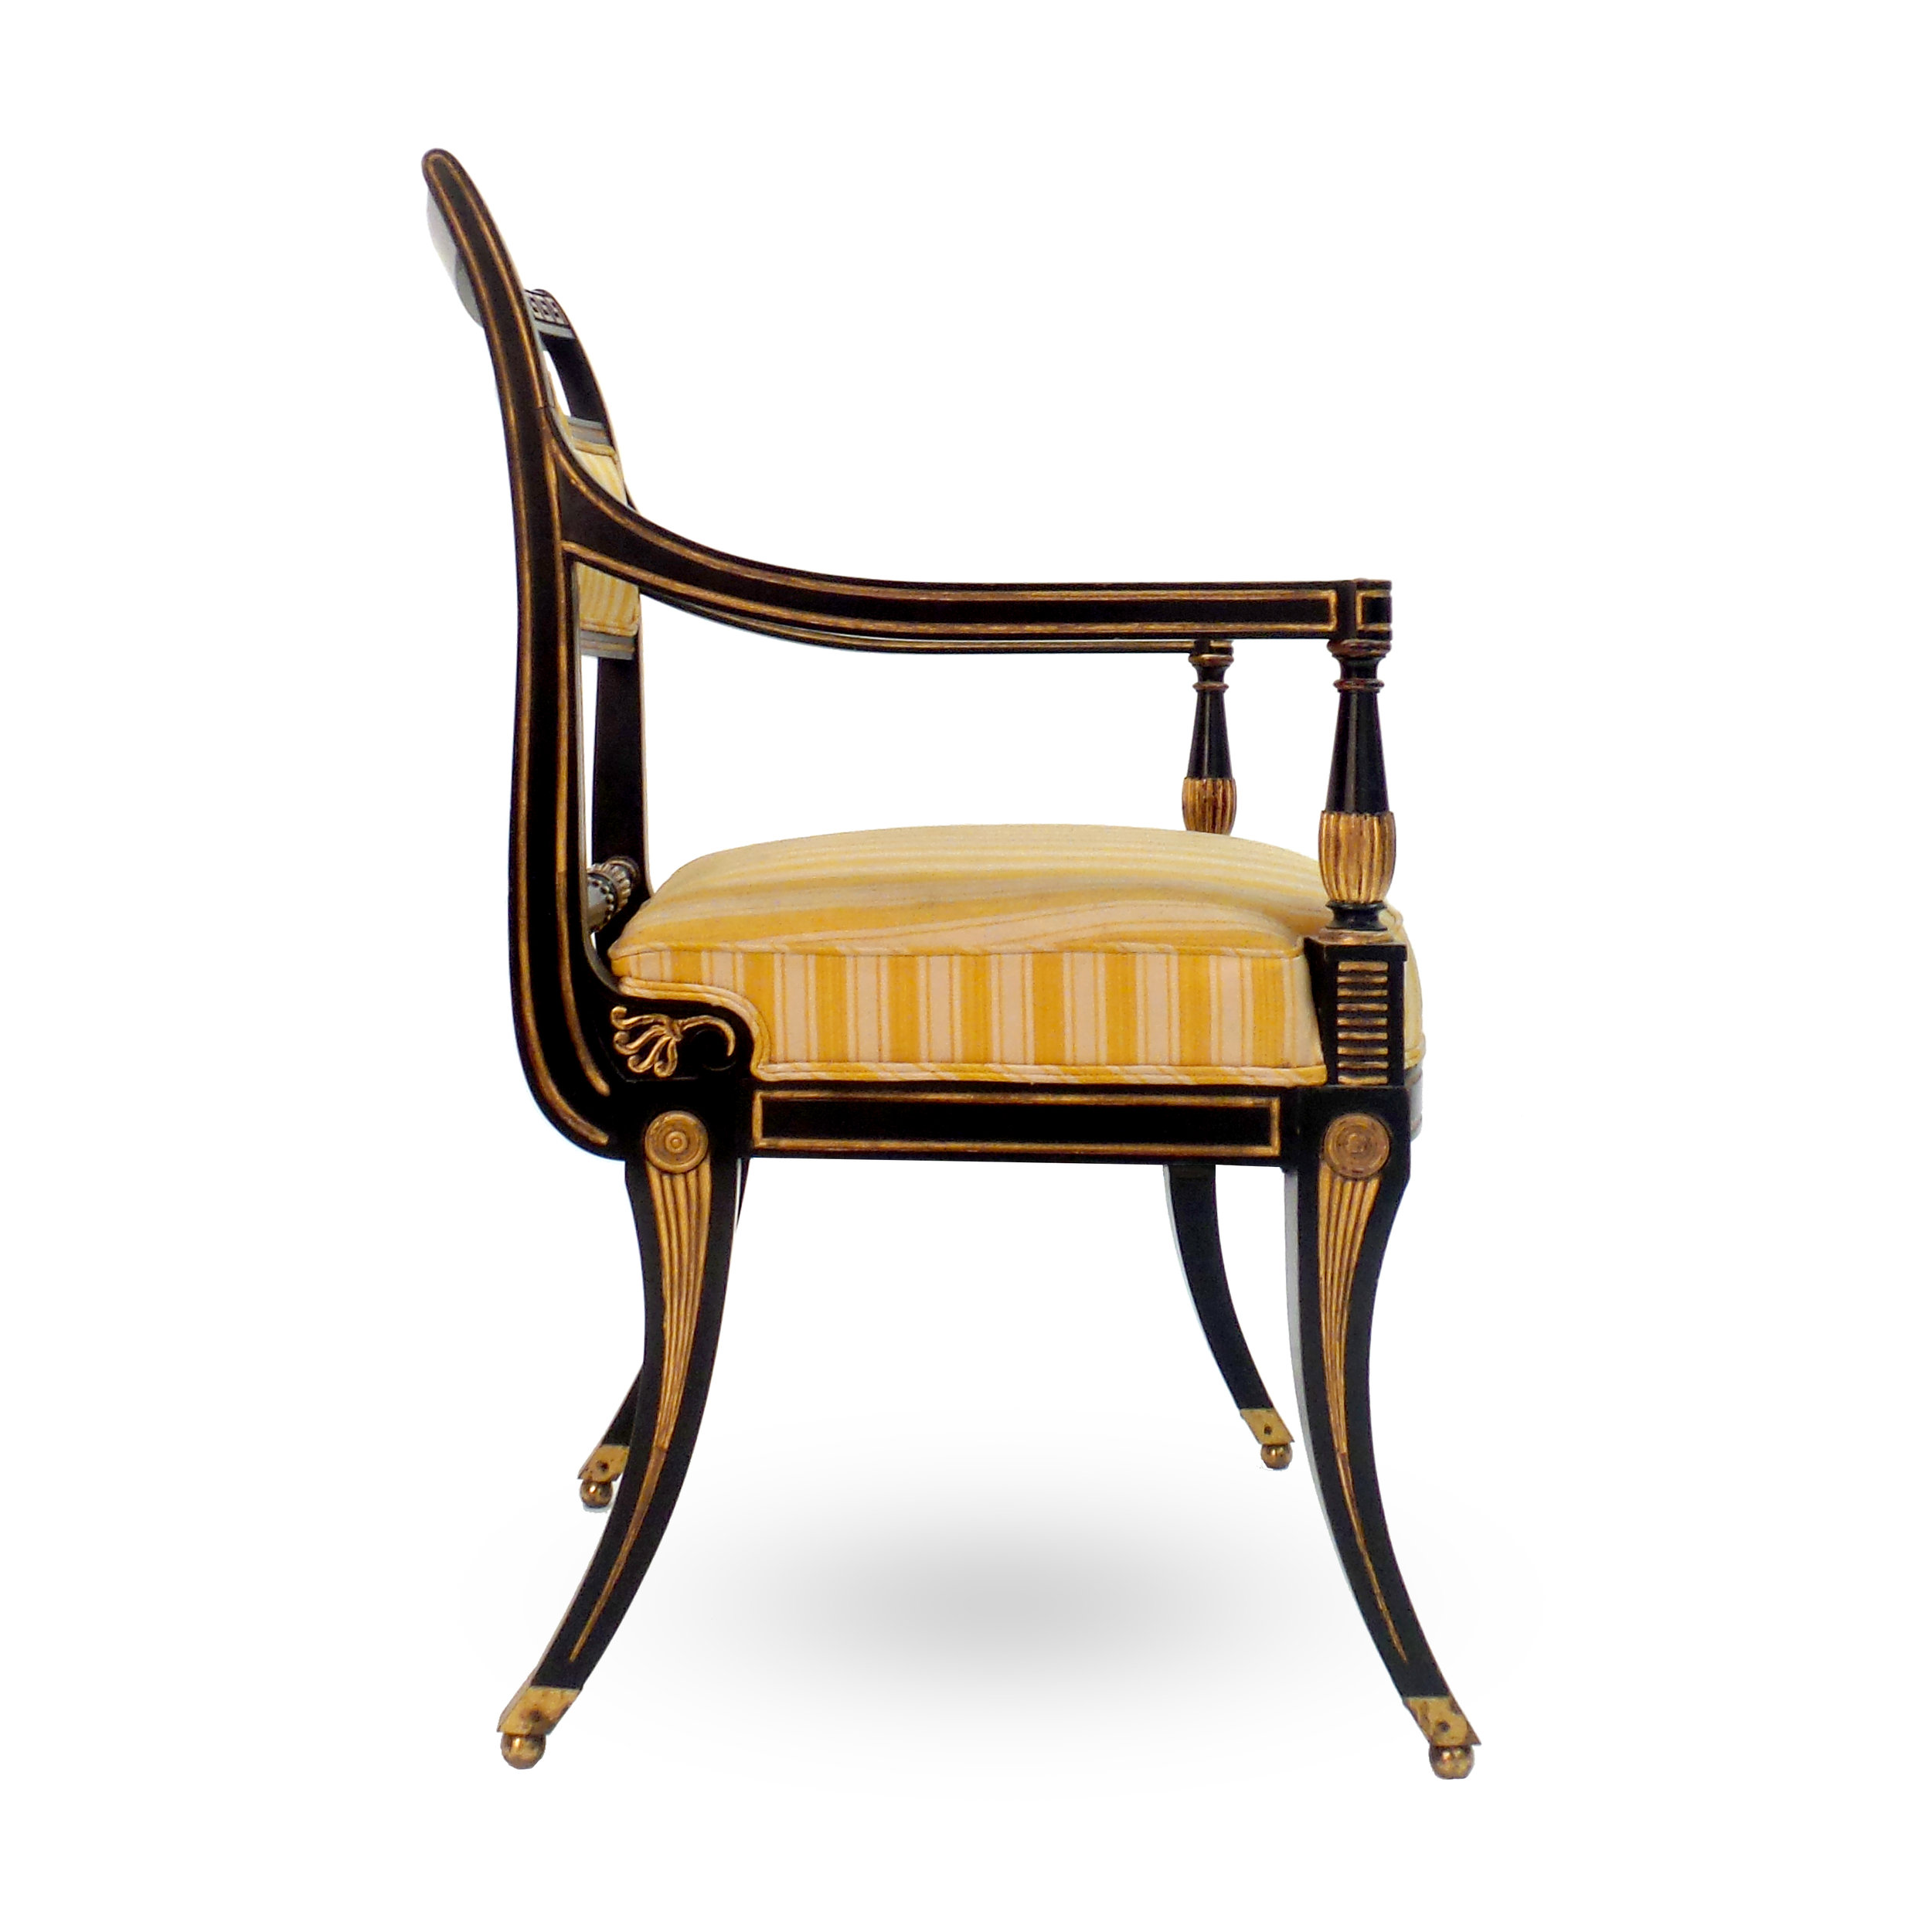 Chair legs. Викторианский стул. Кресло Ампир на колесиках. Regency Style.